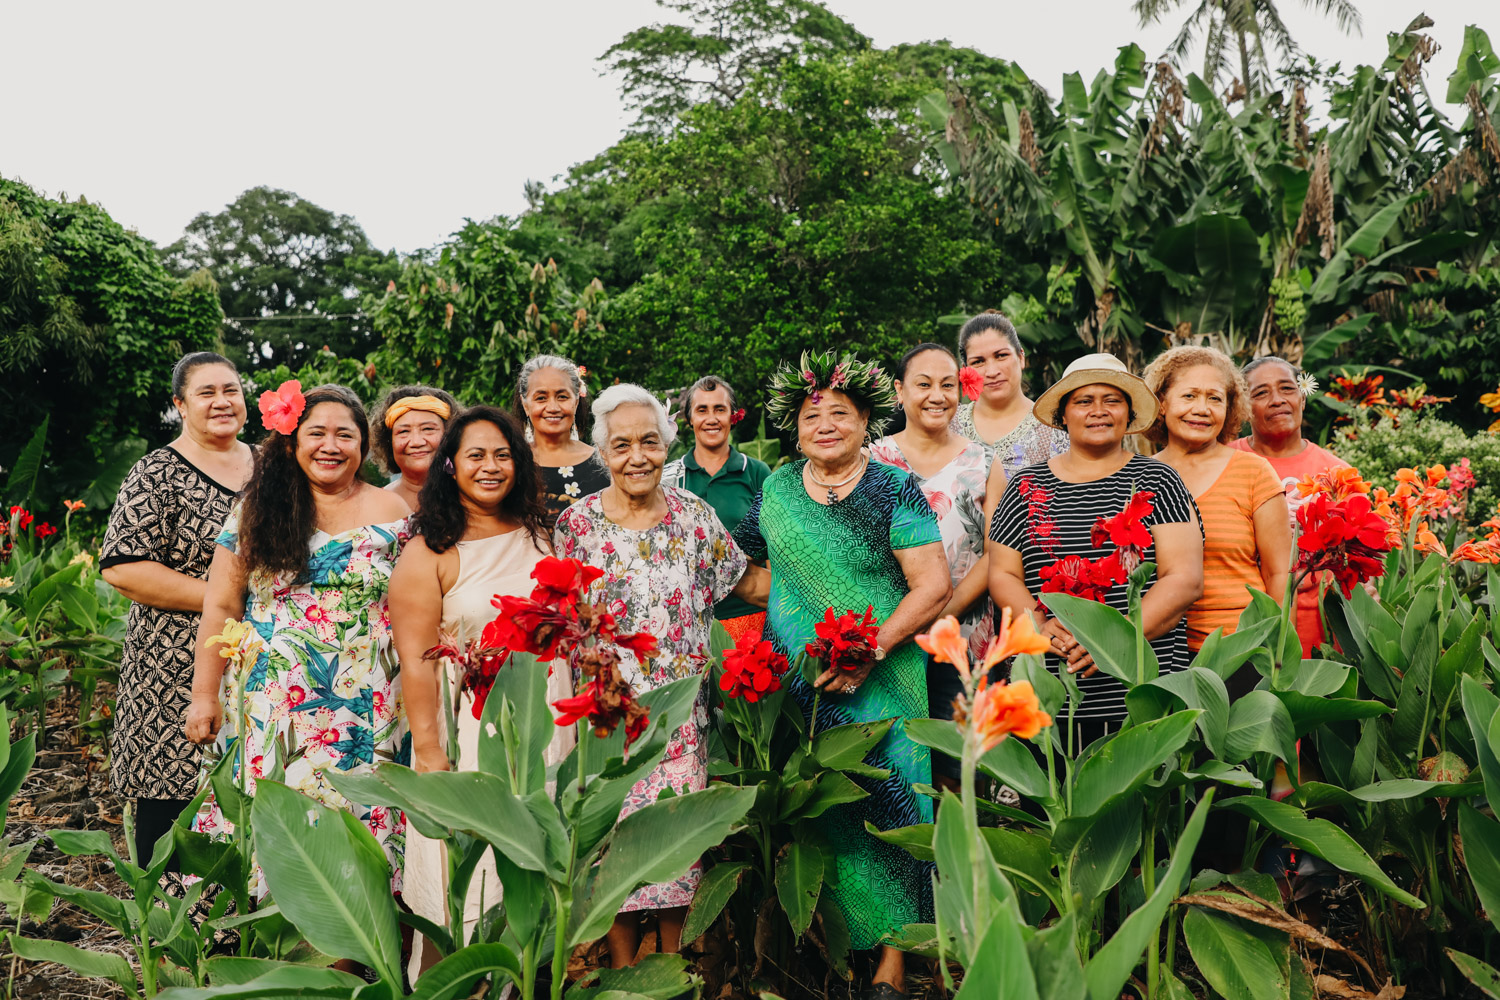 Womenfarmers-Samoa-organicfarm-healthyeating-farmer-agriculture-documentary-photography-documentaryfilm-organicfarming-0659COVER-1